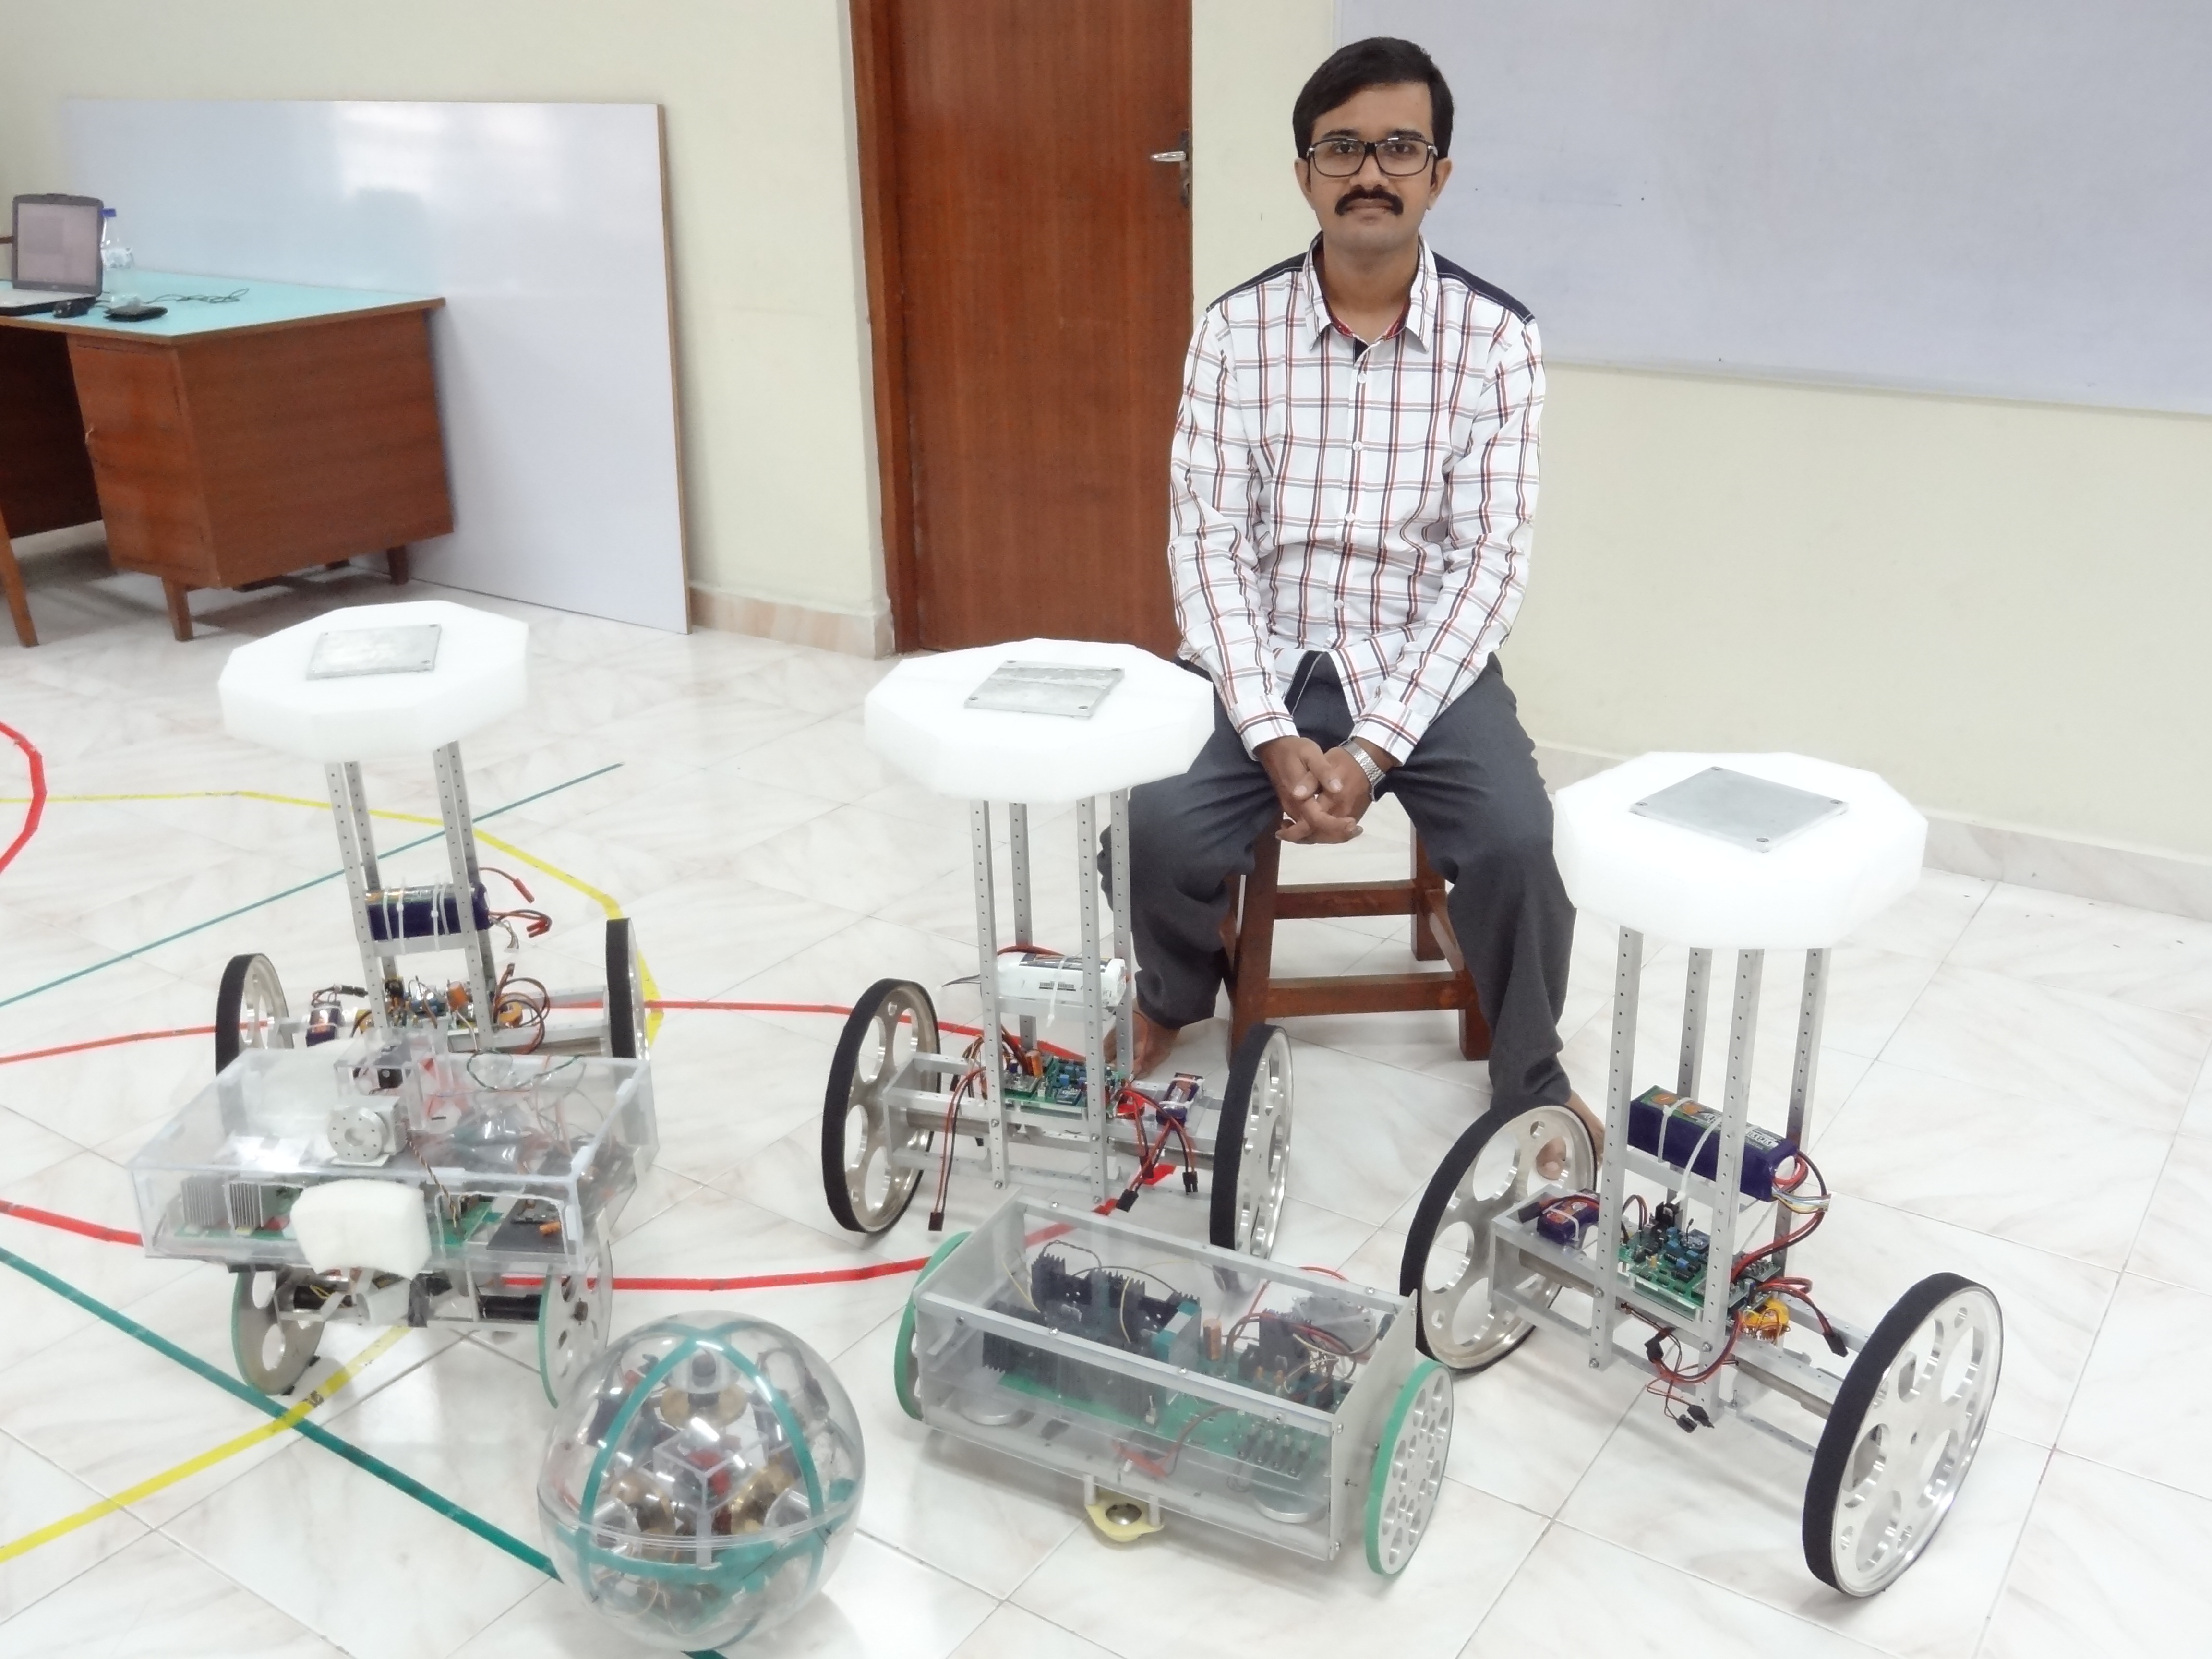 wheeled, spherical and self balancing robots